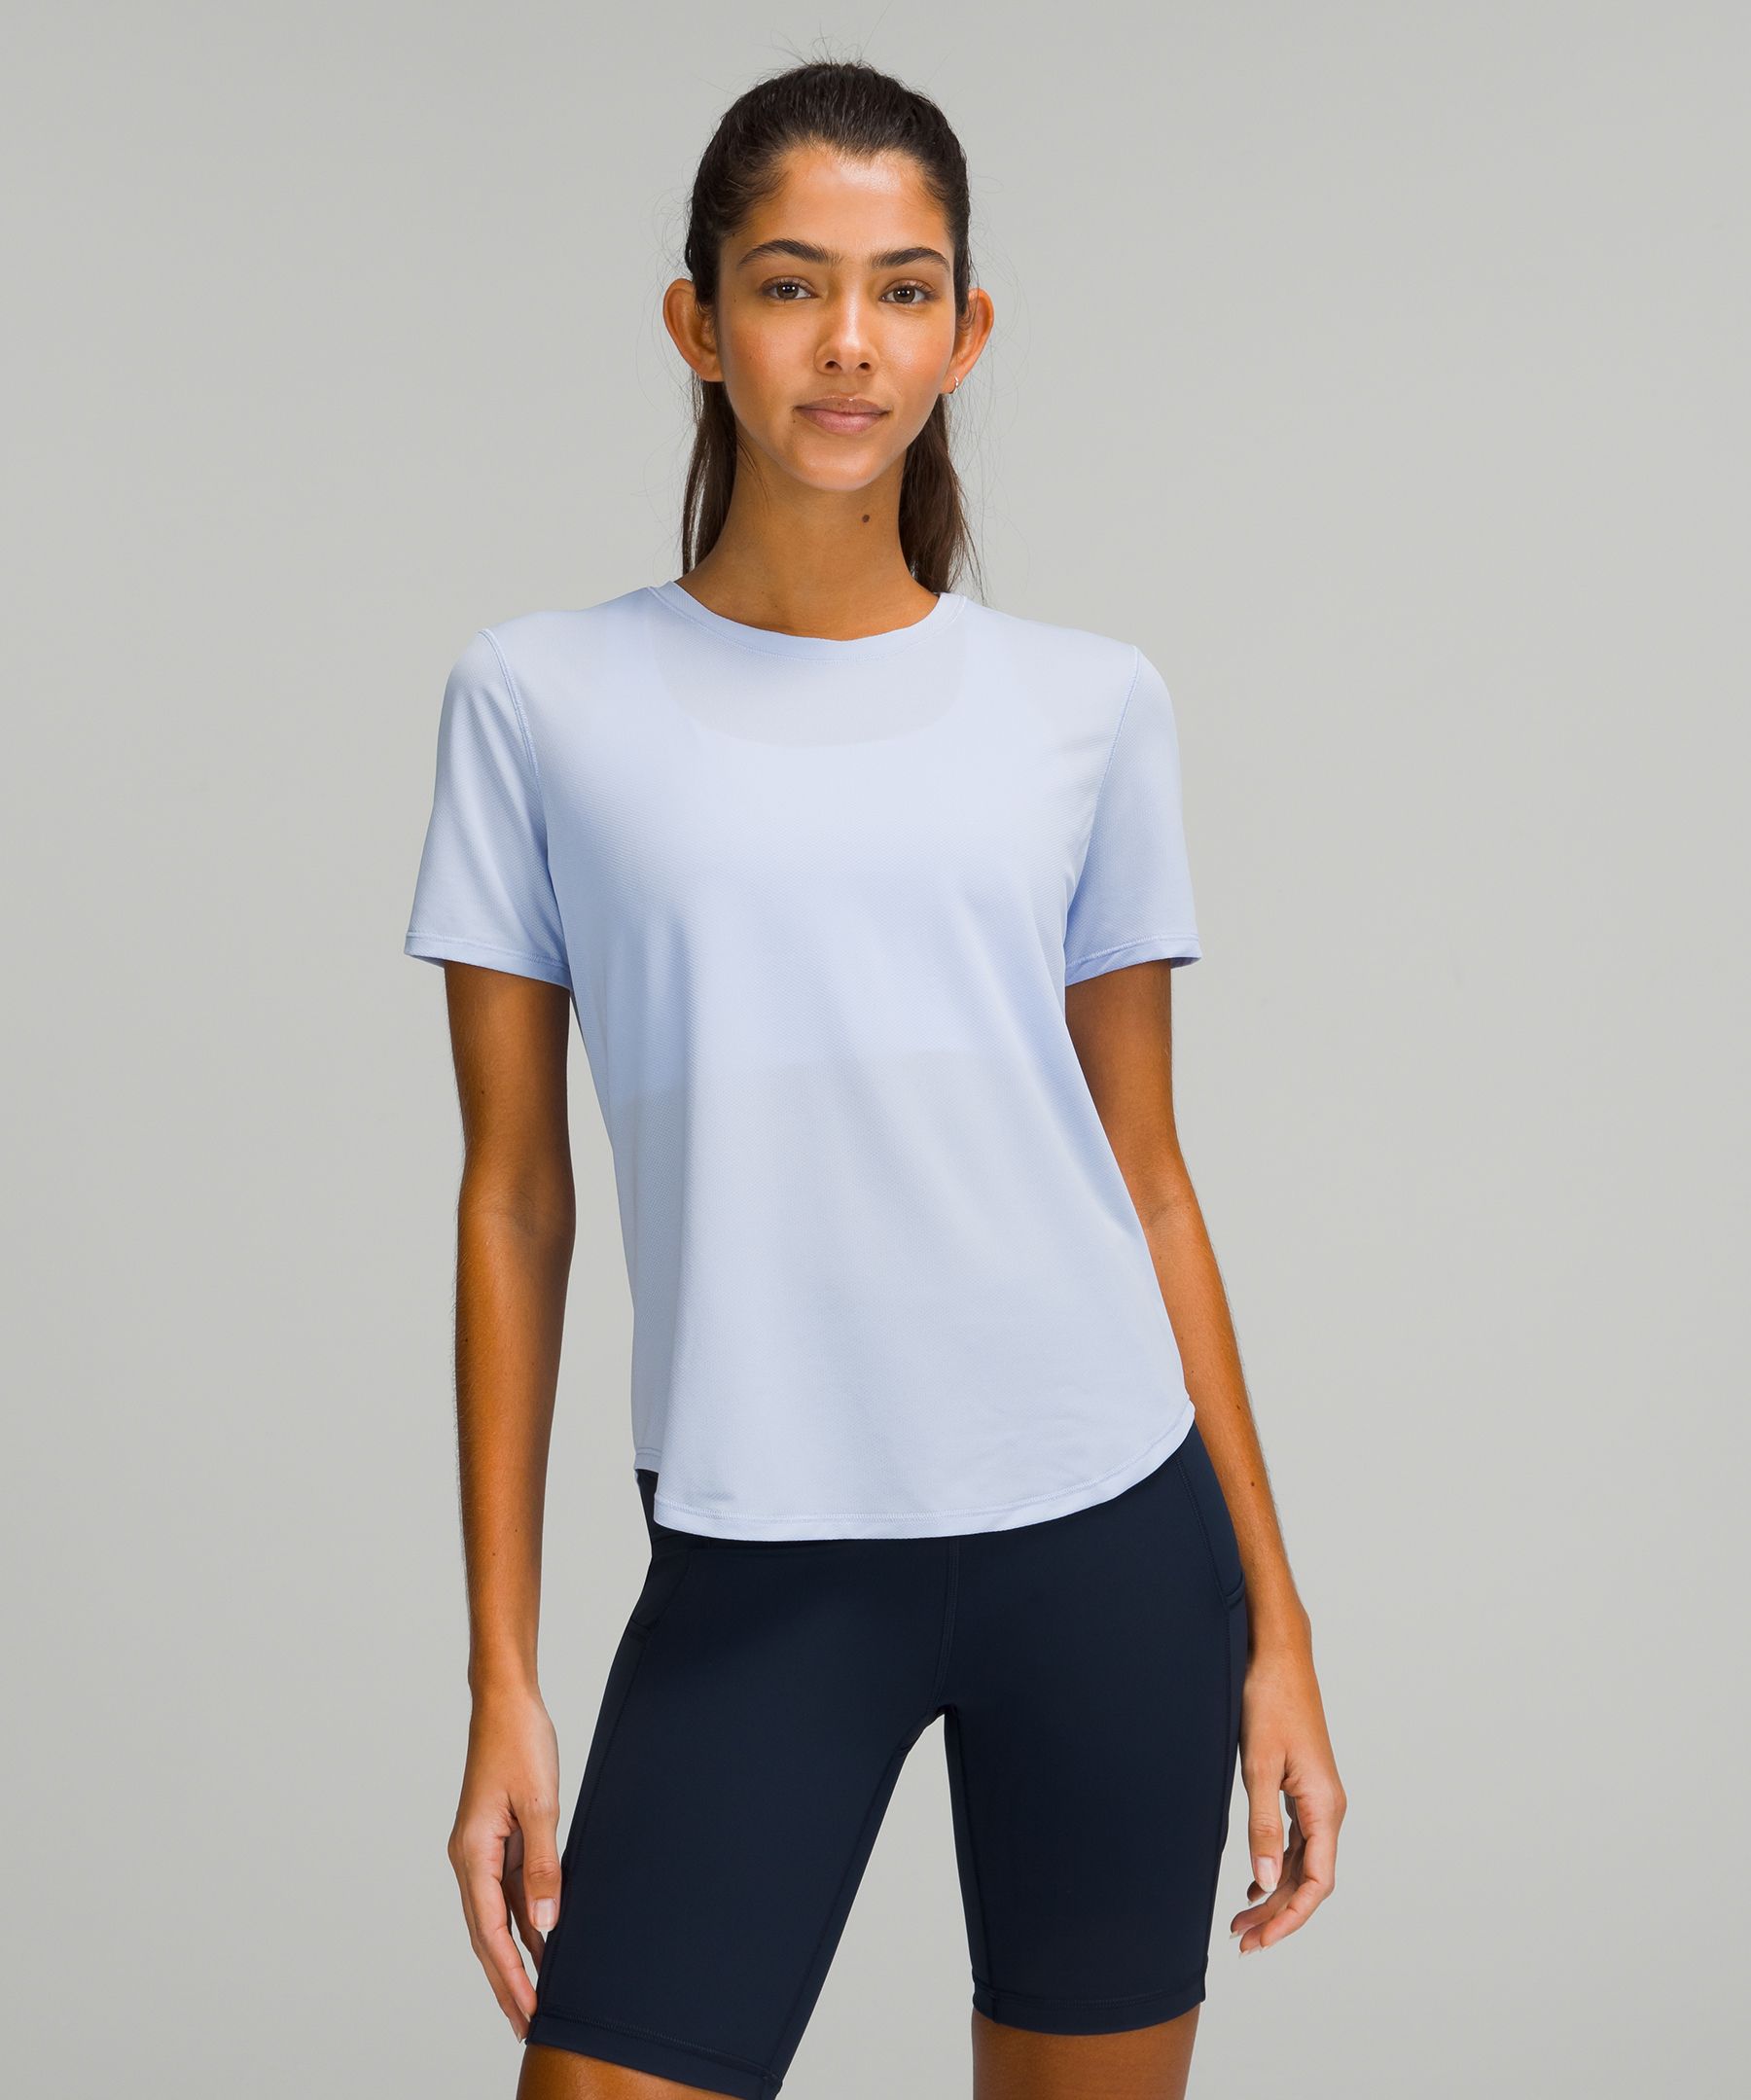 Lululemon High-neck Running And Training T-shirt In Blue Linen